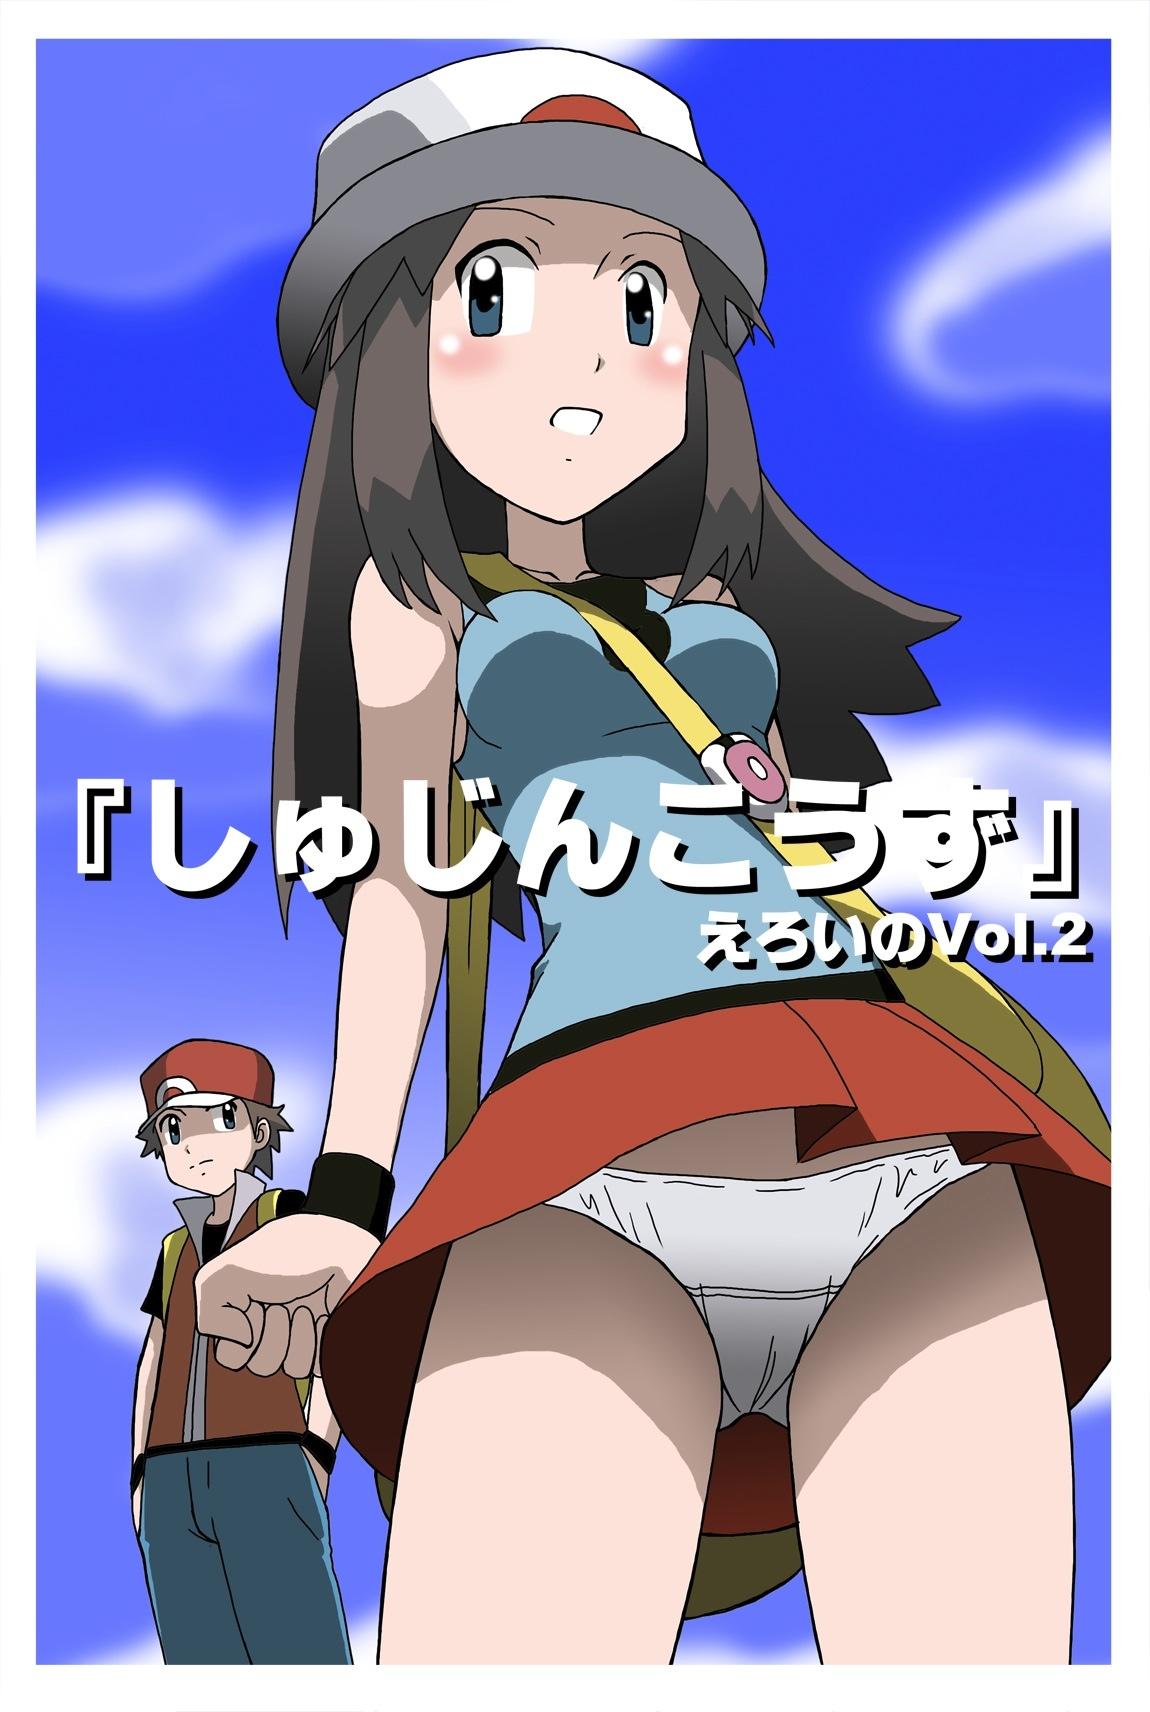 Plumper 「Shujinkouzu」 Eroi no Vol.2 - Pokemon Highheels - Page 1